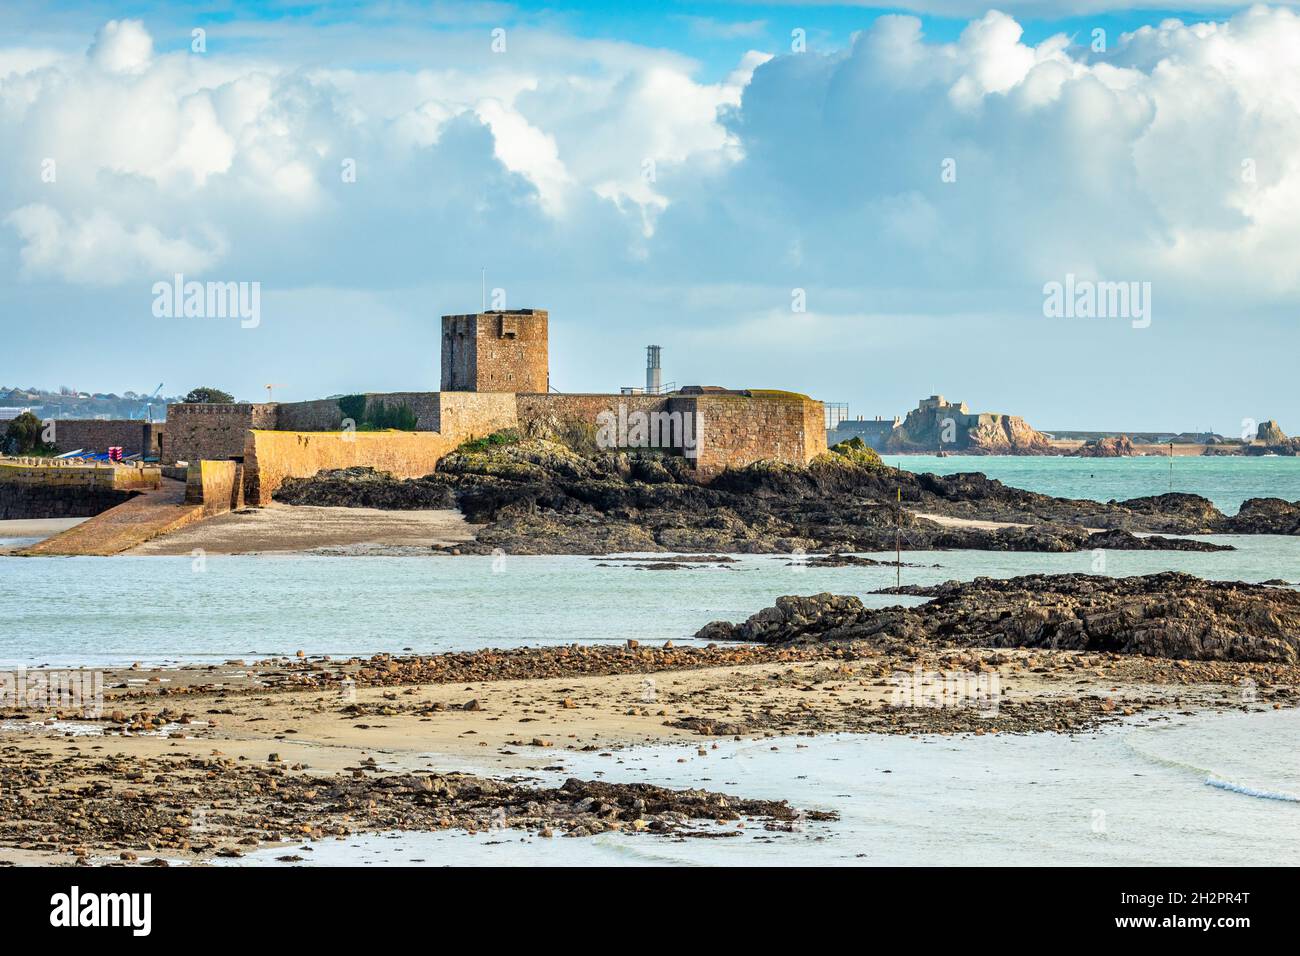 Saint Aubin Fort in a low tide with Elizabeth castle in the background, La Manche channel, bailiwick of Jersey, Channel Islands Stock Photo